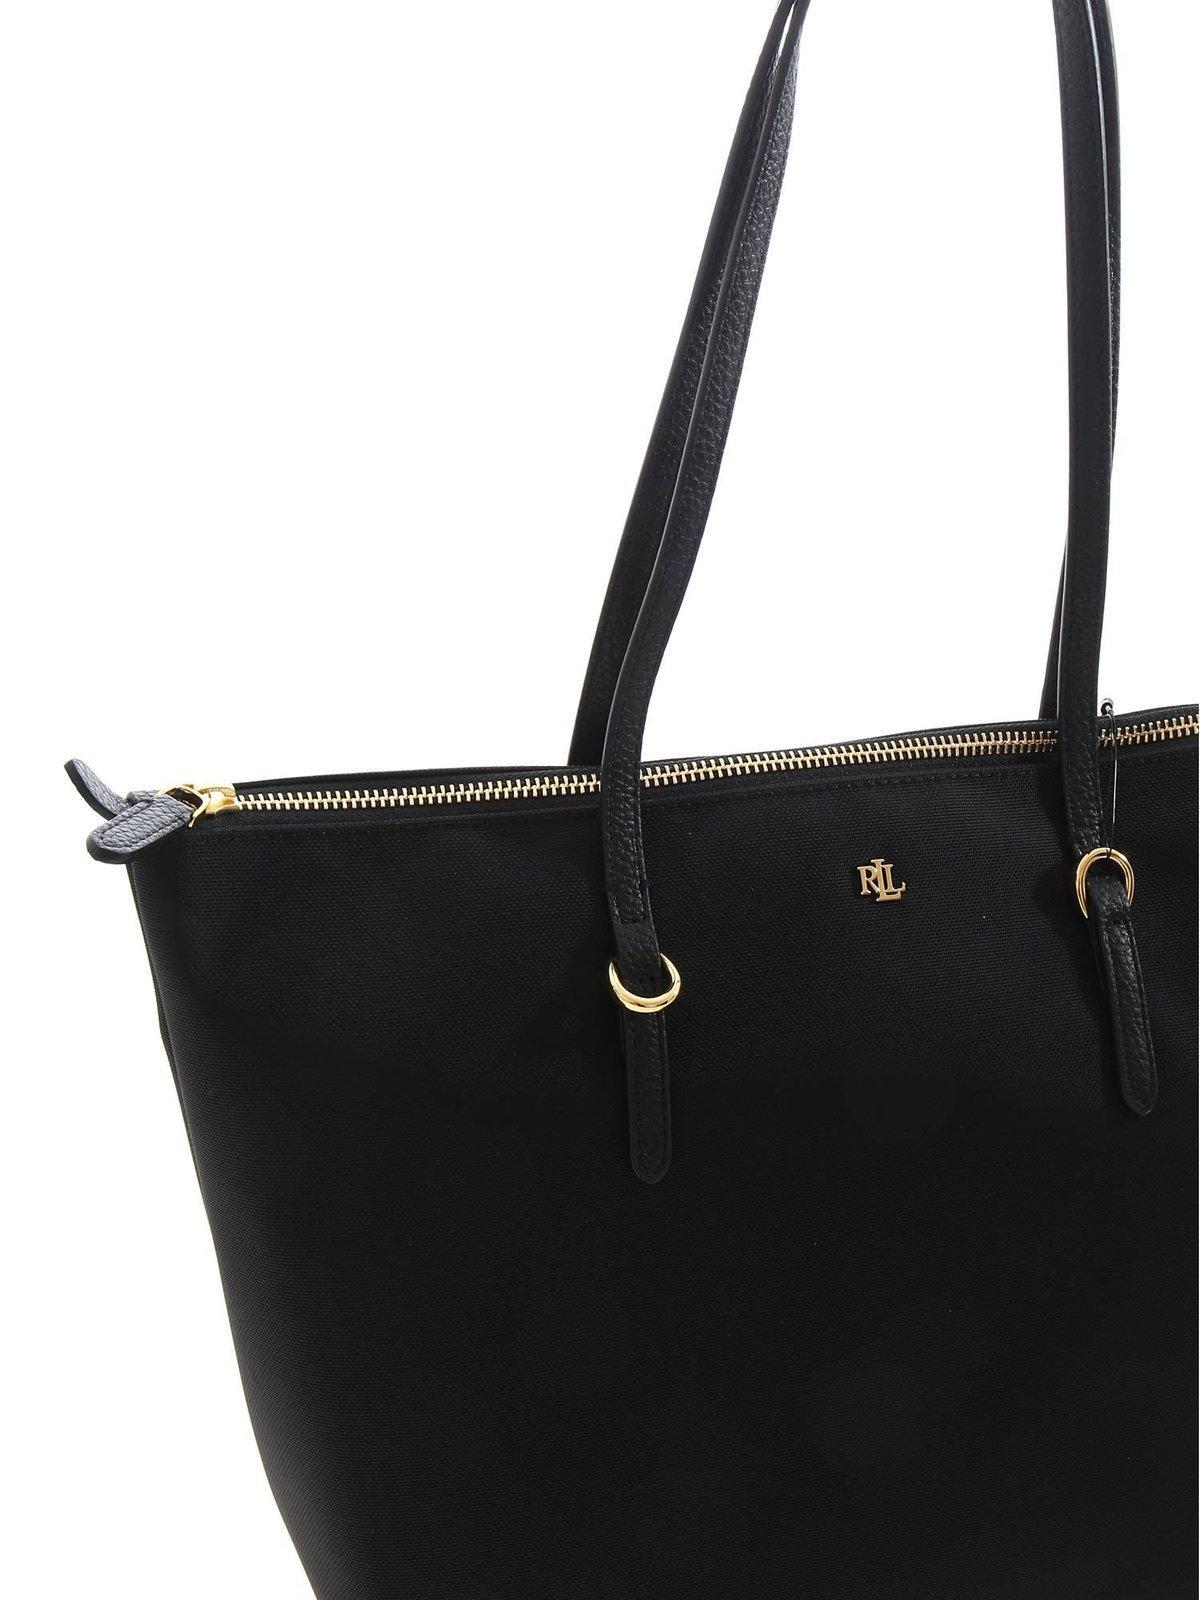 Polo Ralph Lauren Logo Plaque Tote Bag in Black | Lyst